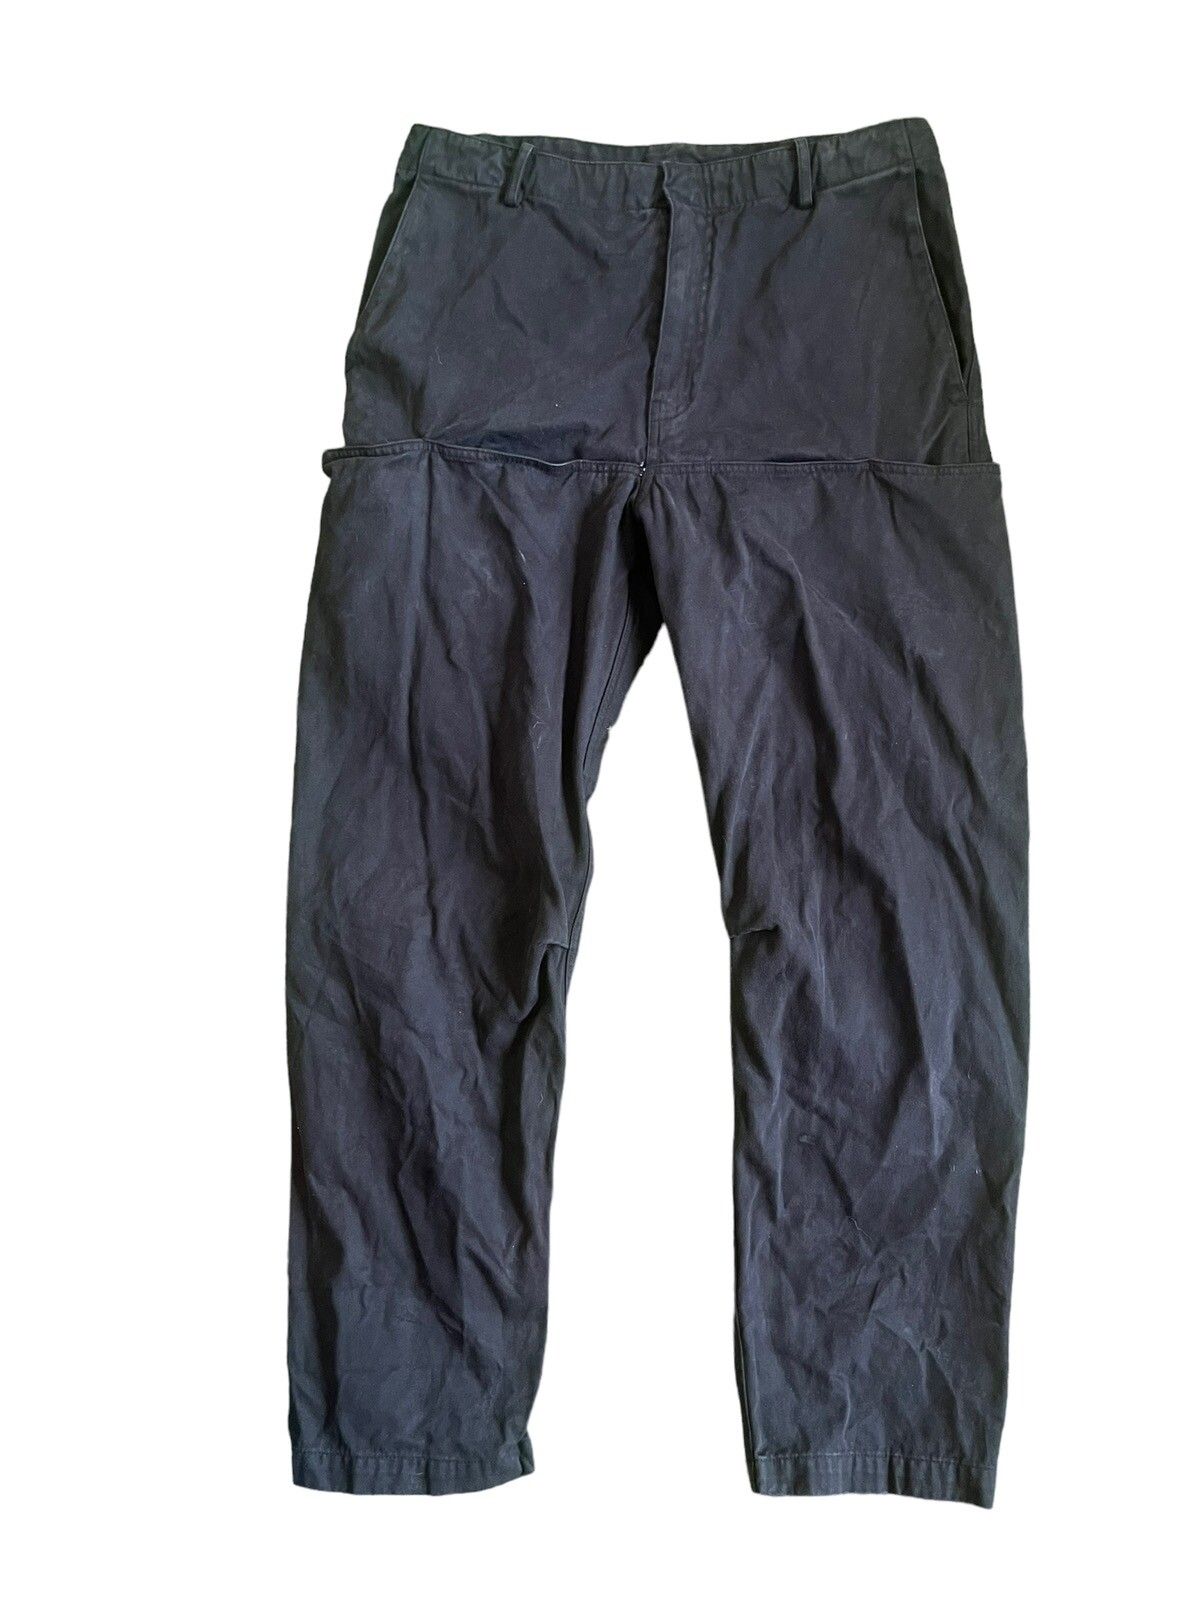 Gap YZY x Gap engineered by BALENCIAGA moleskin workwear pants | Grailed